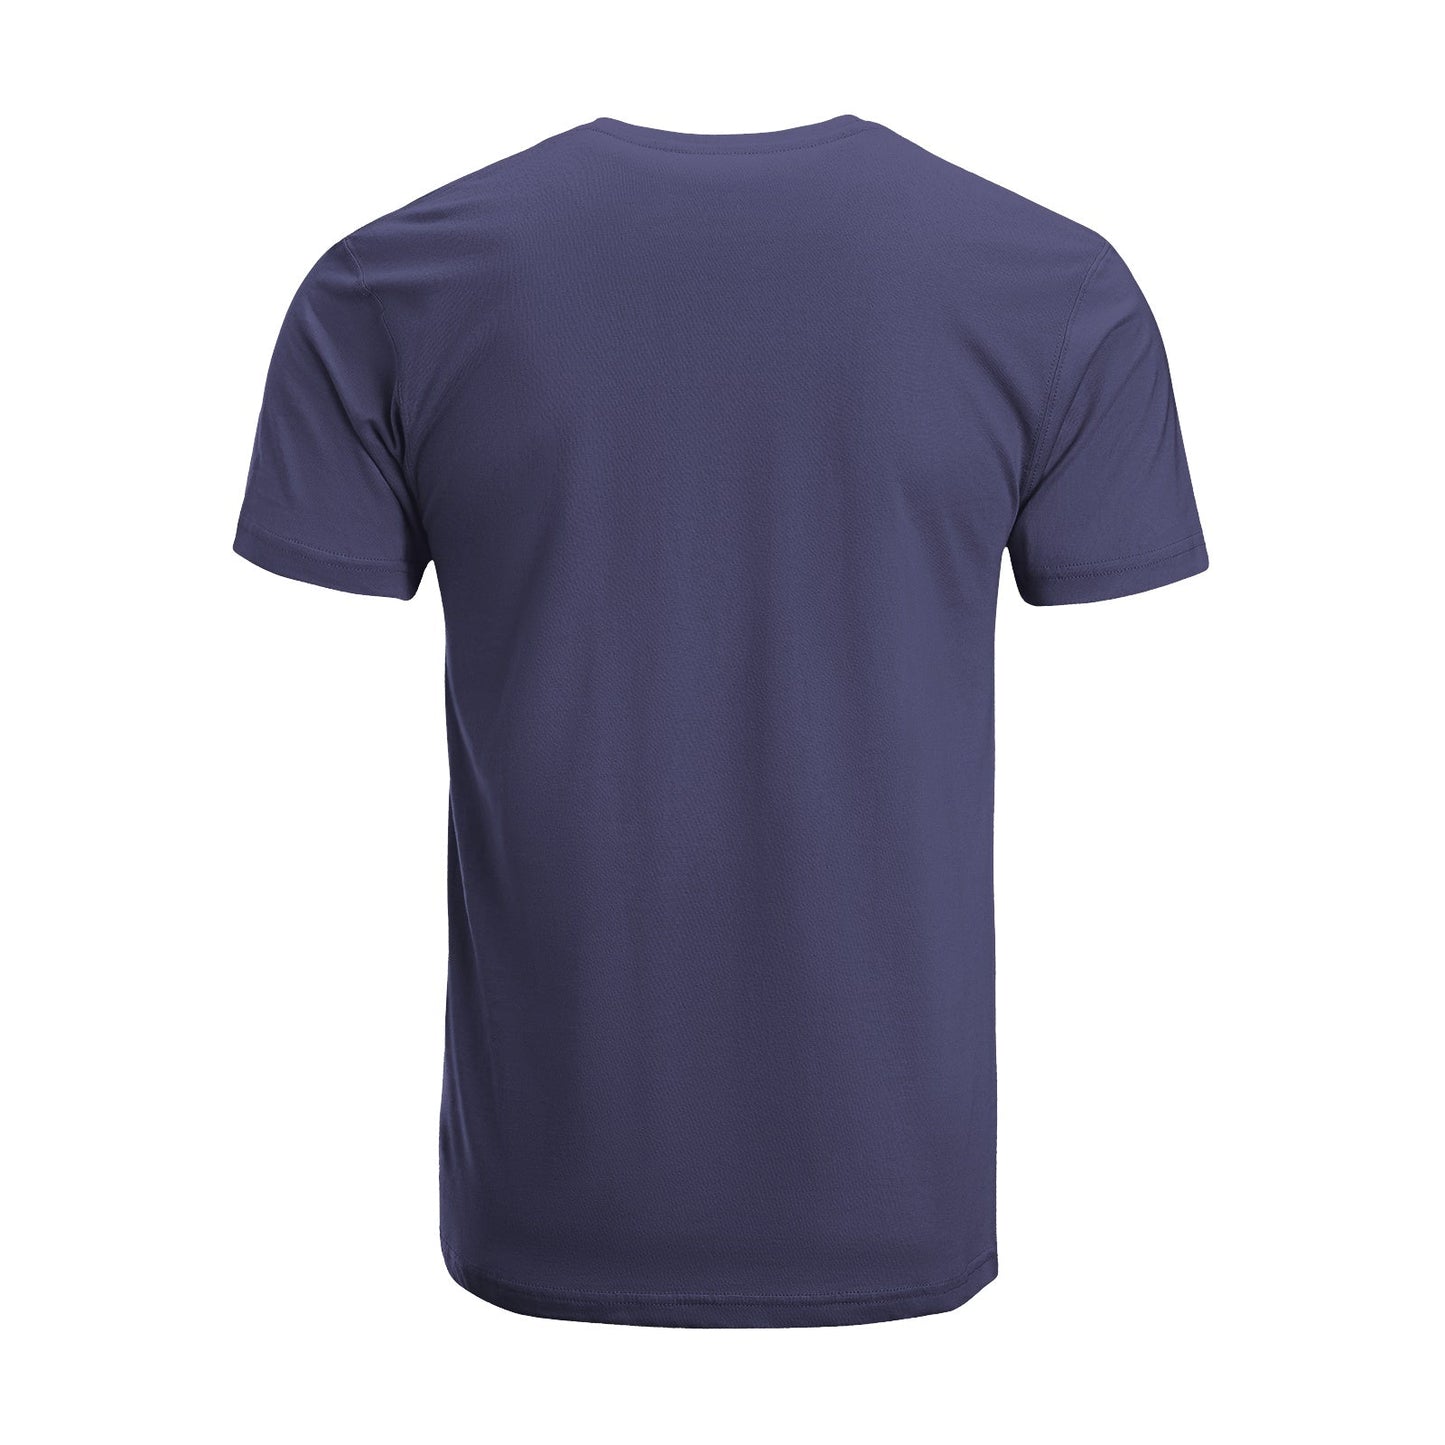 Unisex Short Sleeve Crew Neck Cotton Jersey T-Shirt Gym No. 03 - Tara-Outfits.com